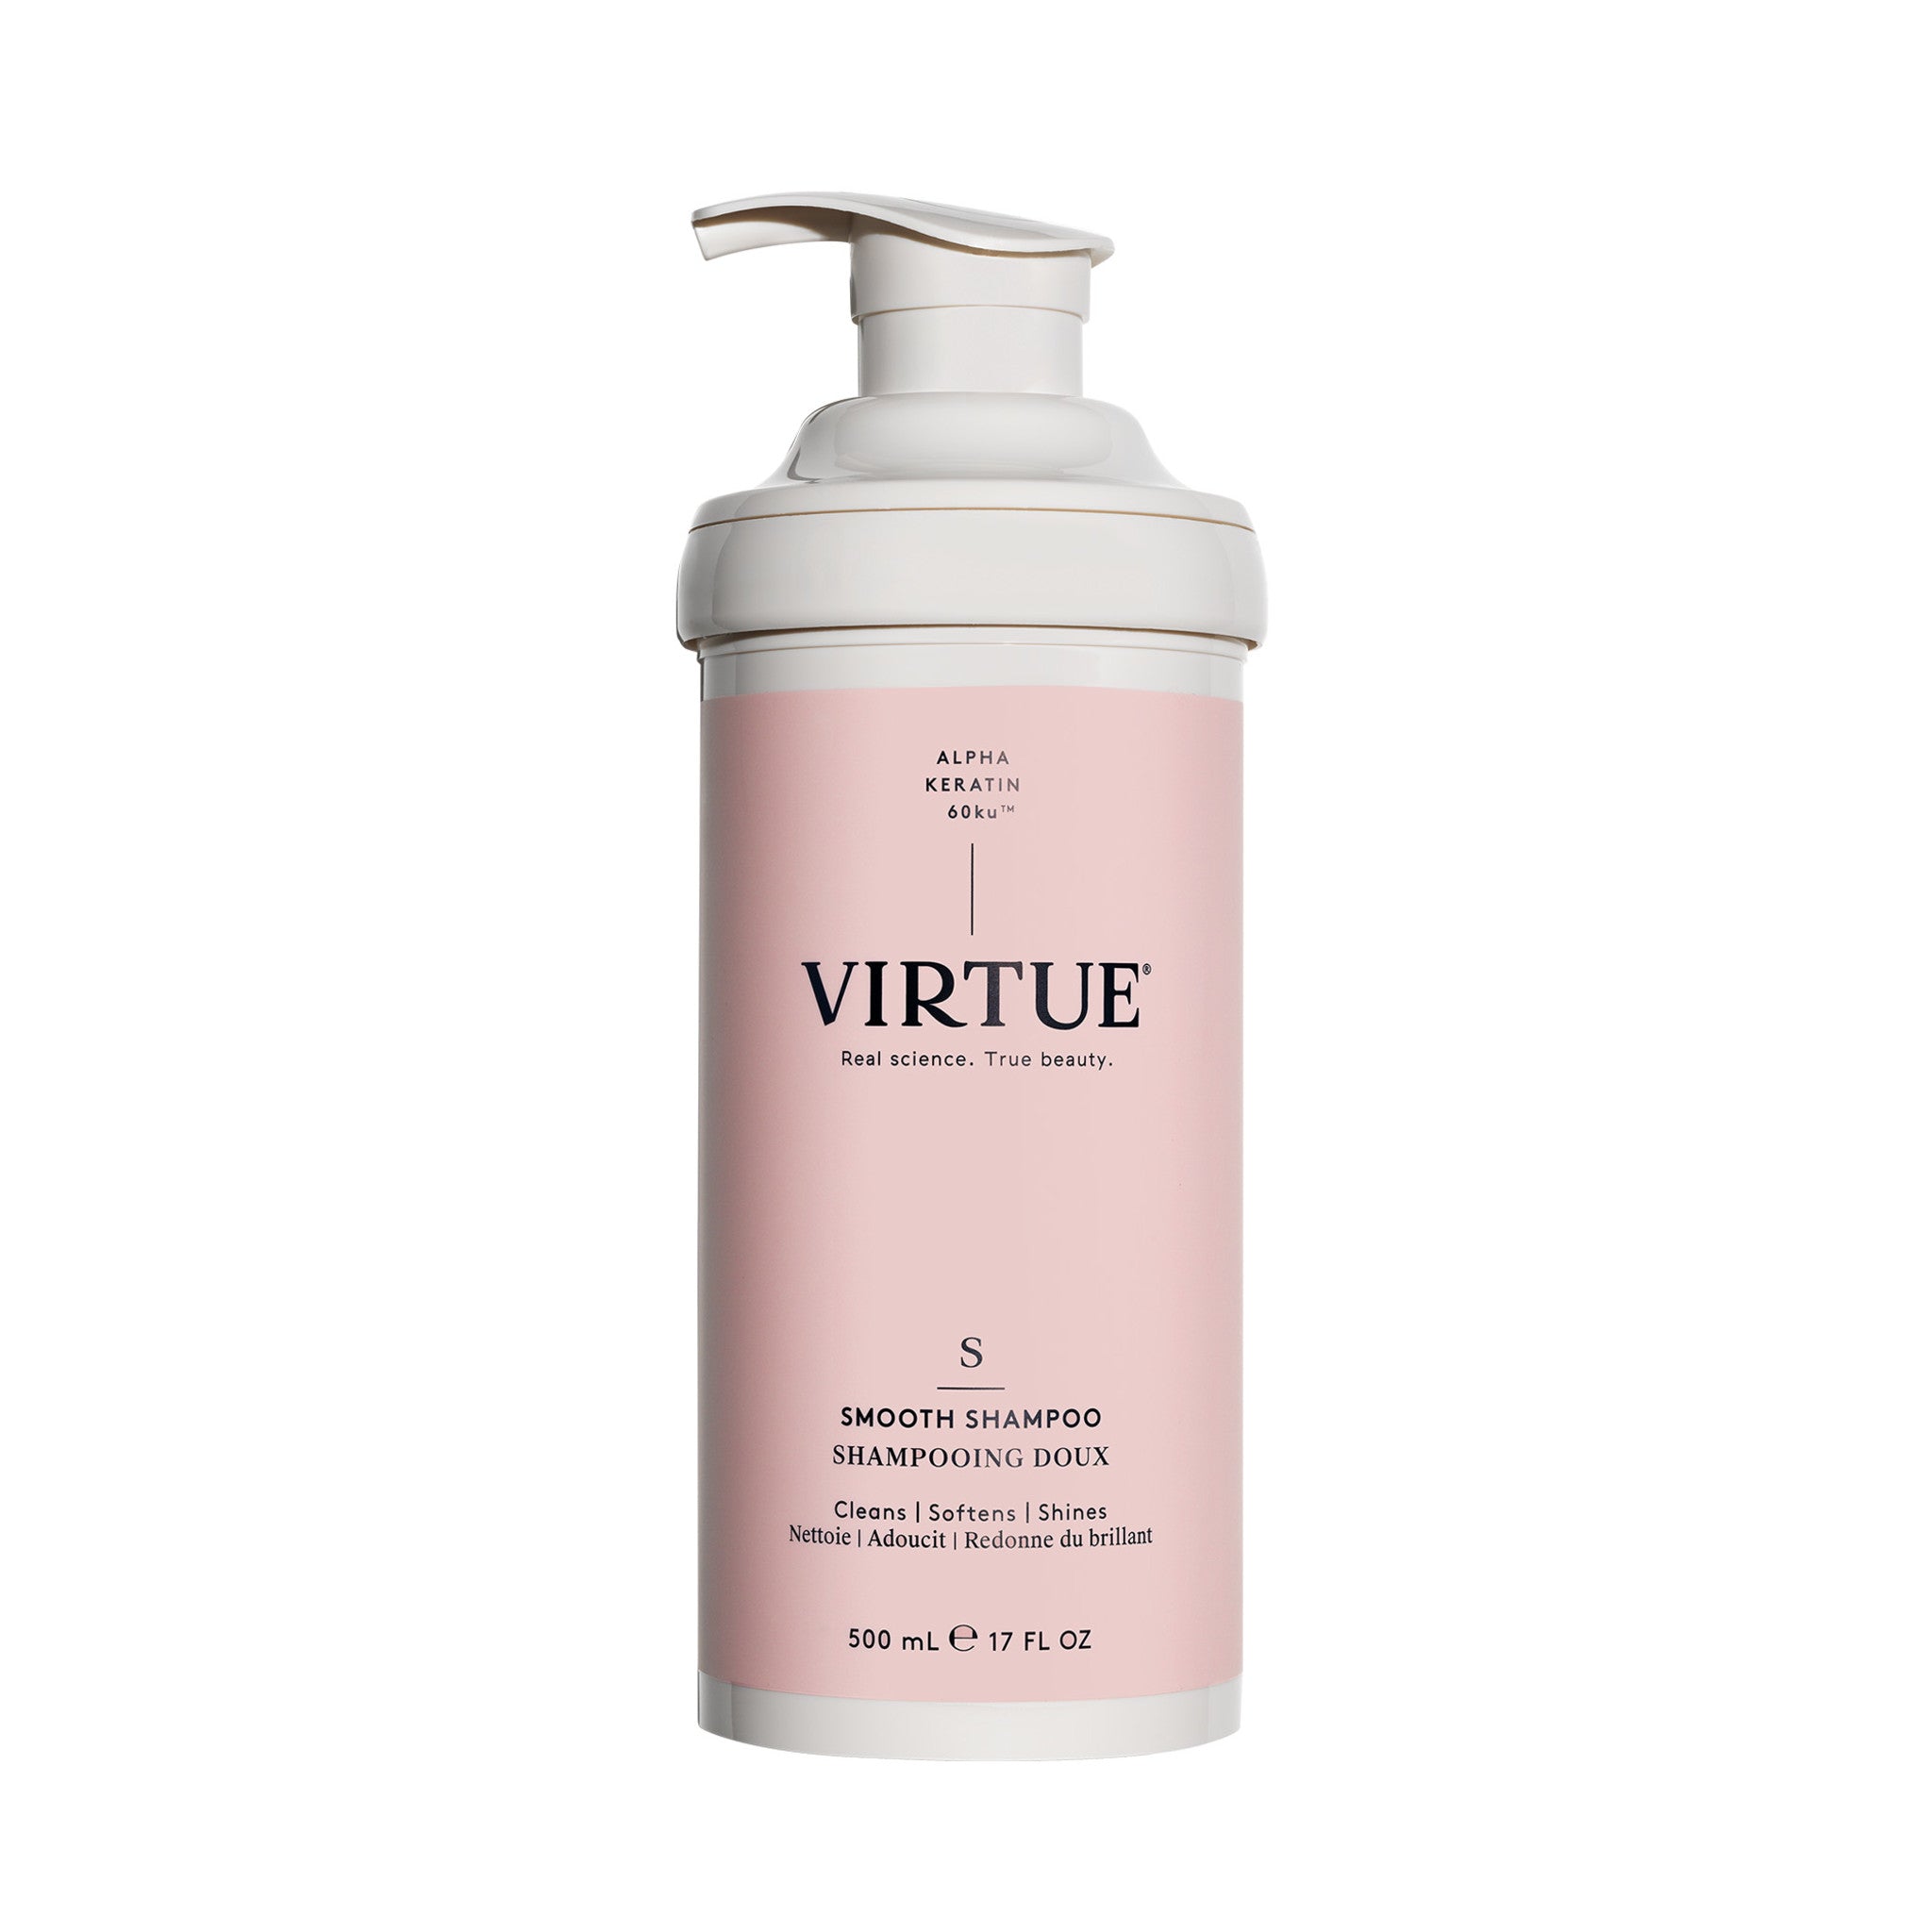 Virtue Smooth Shampoo Size variant: 17 oz | 500 ml main image.